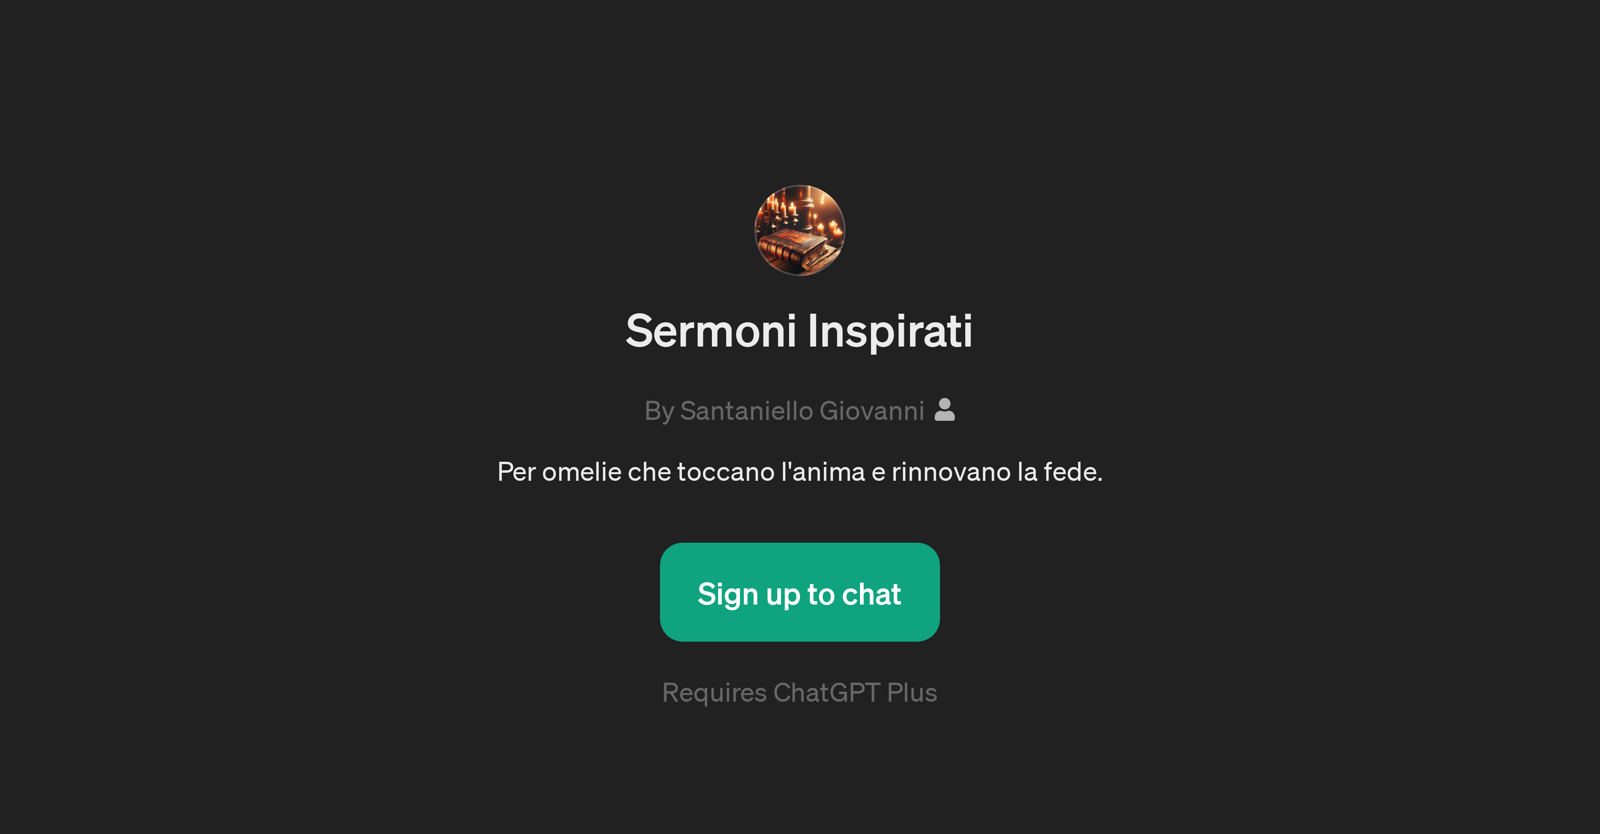 Sermoni Inspirati website